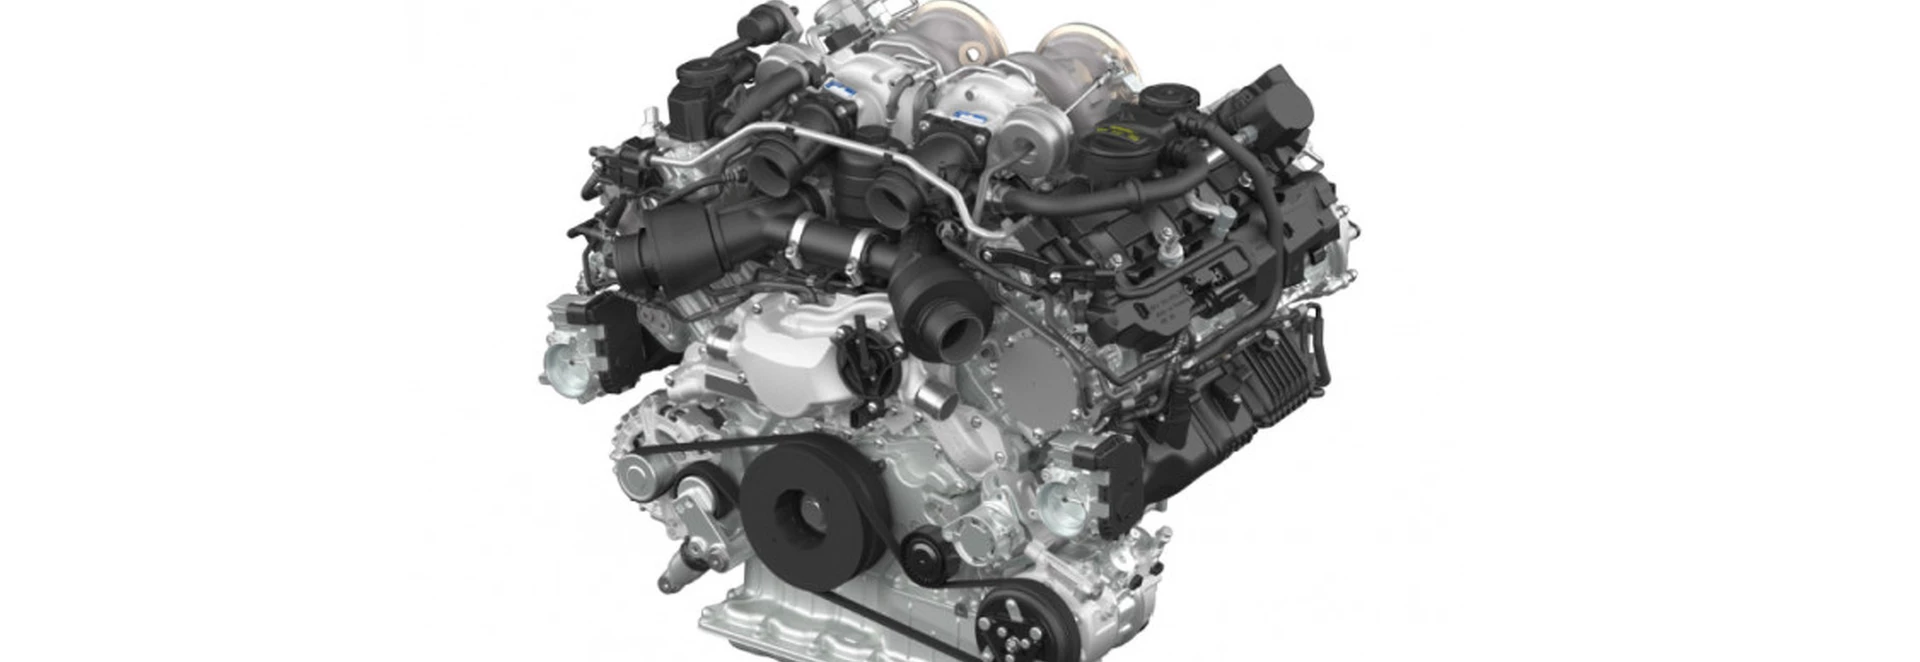 Porsche reveals new twin-turbo V8 engine 